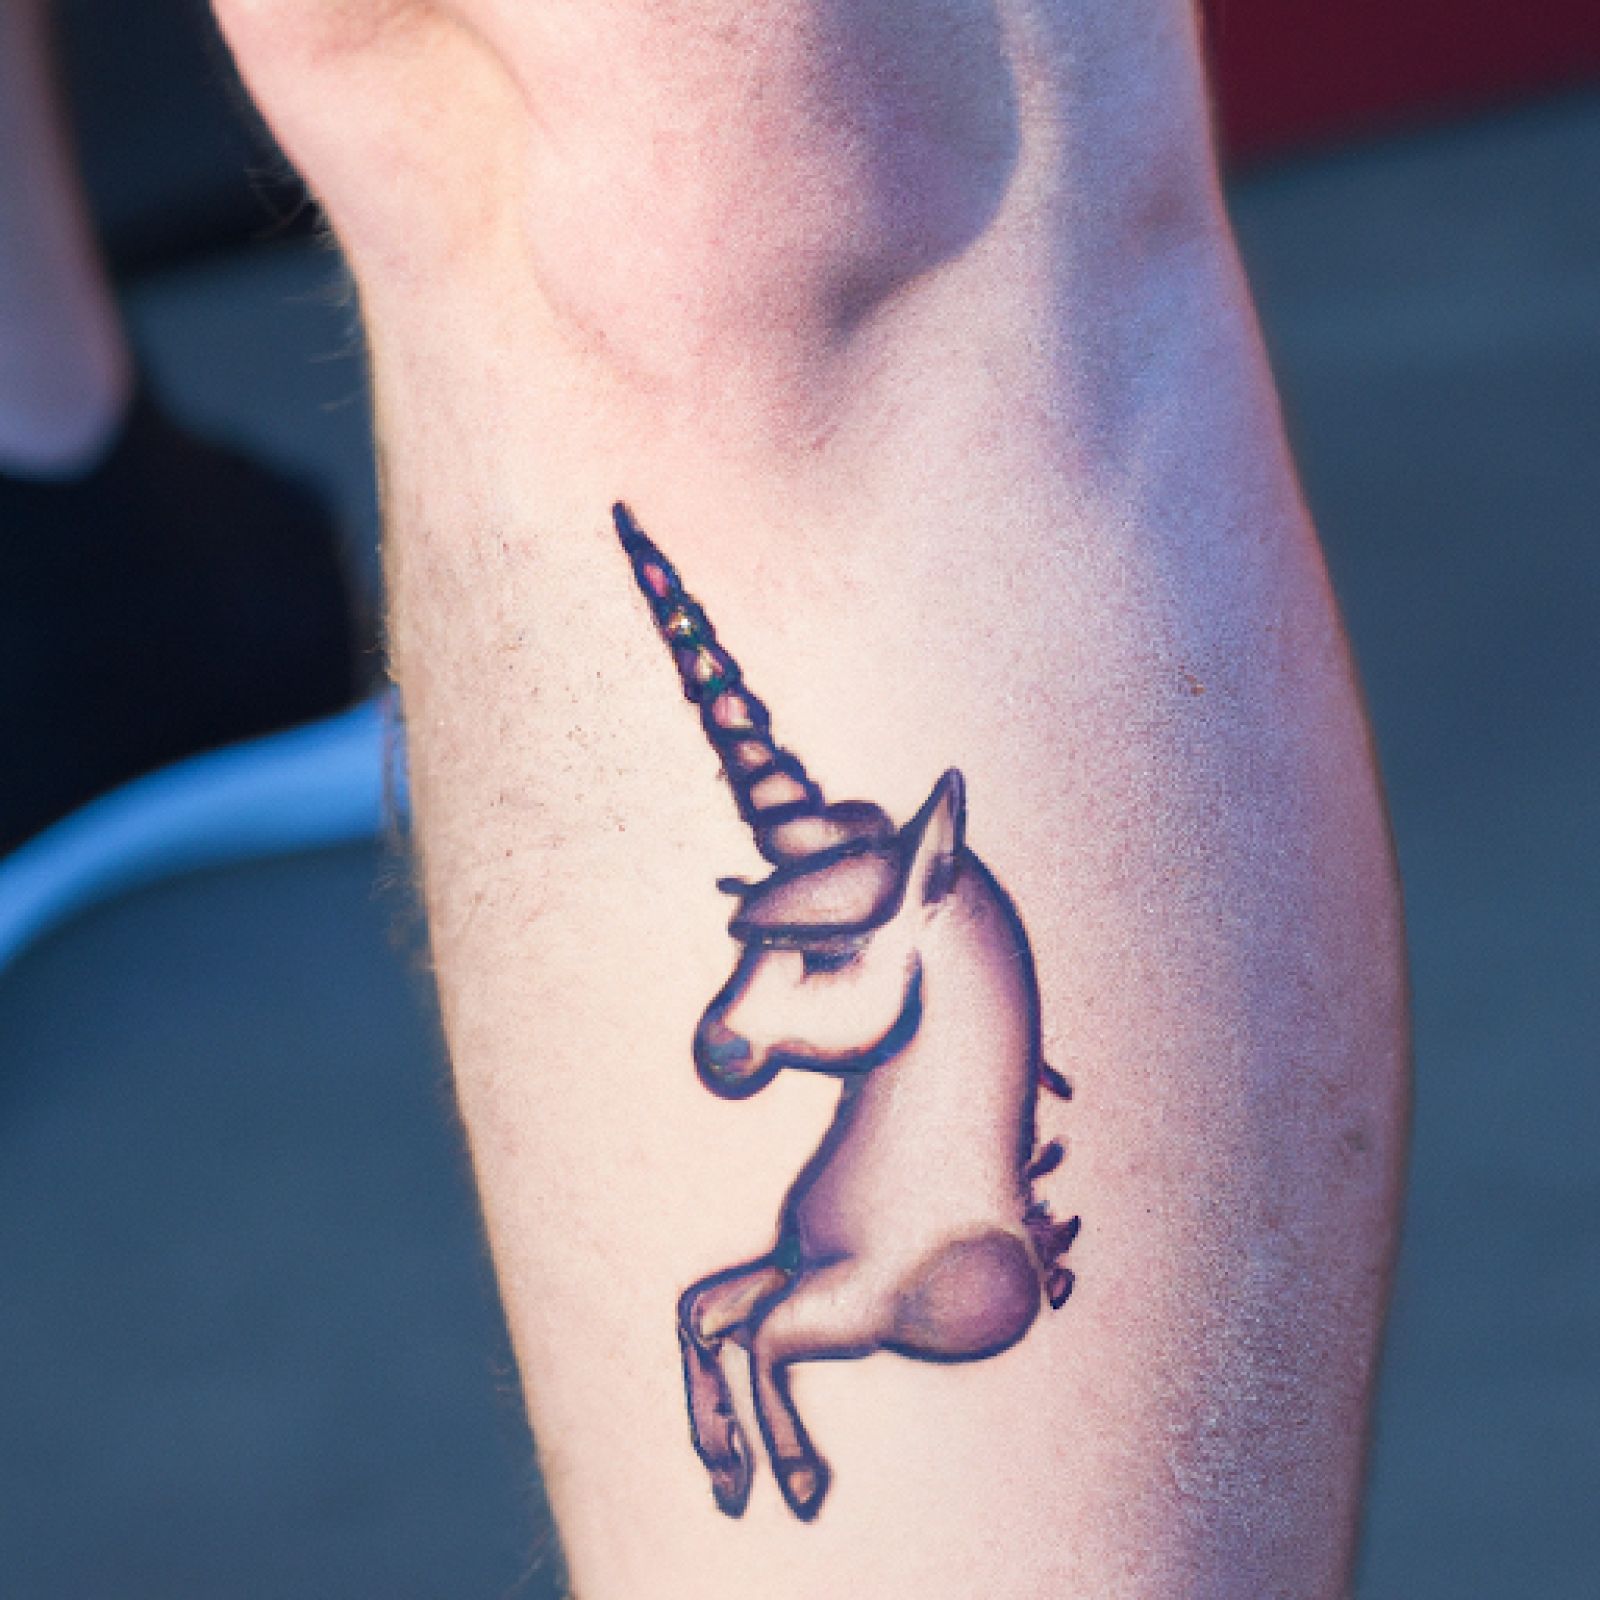 Unicorn tattoo on knee for men